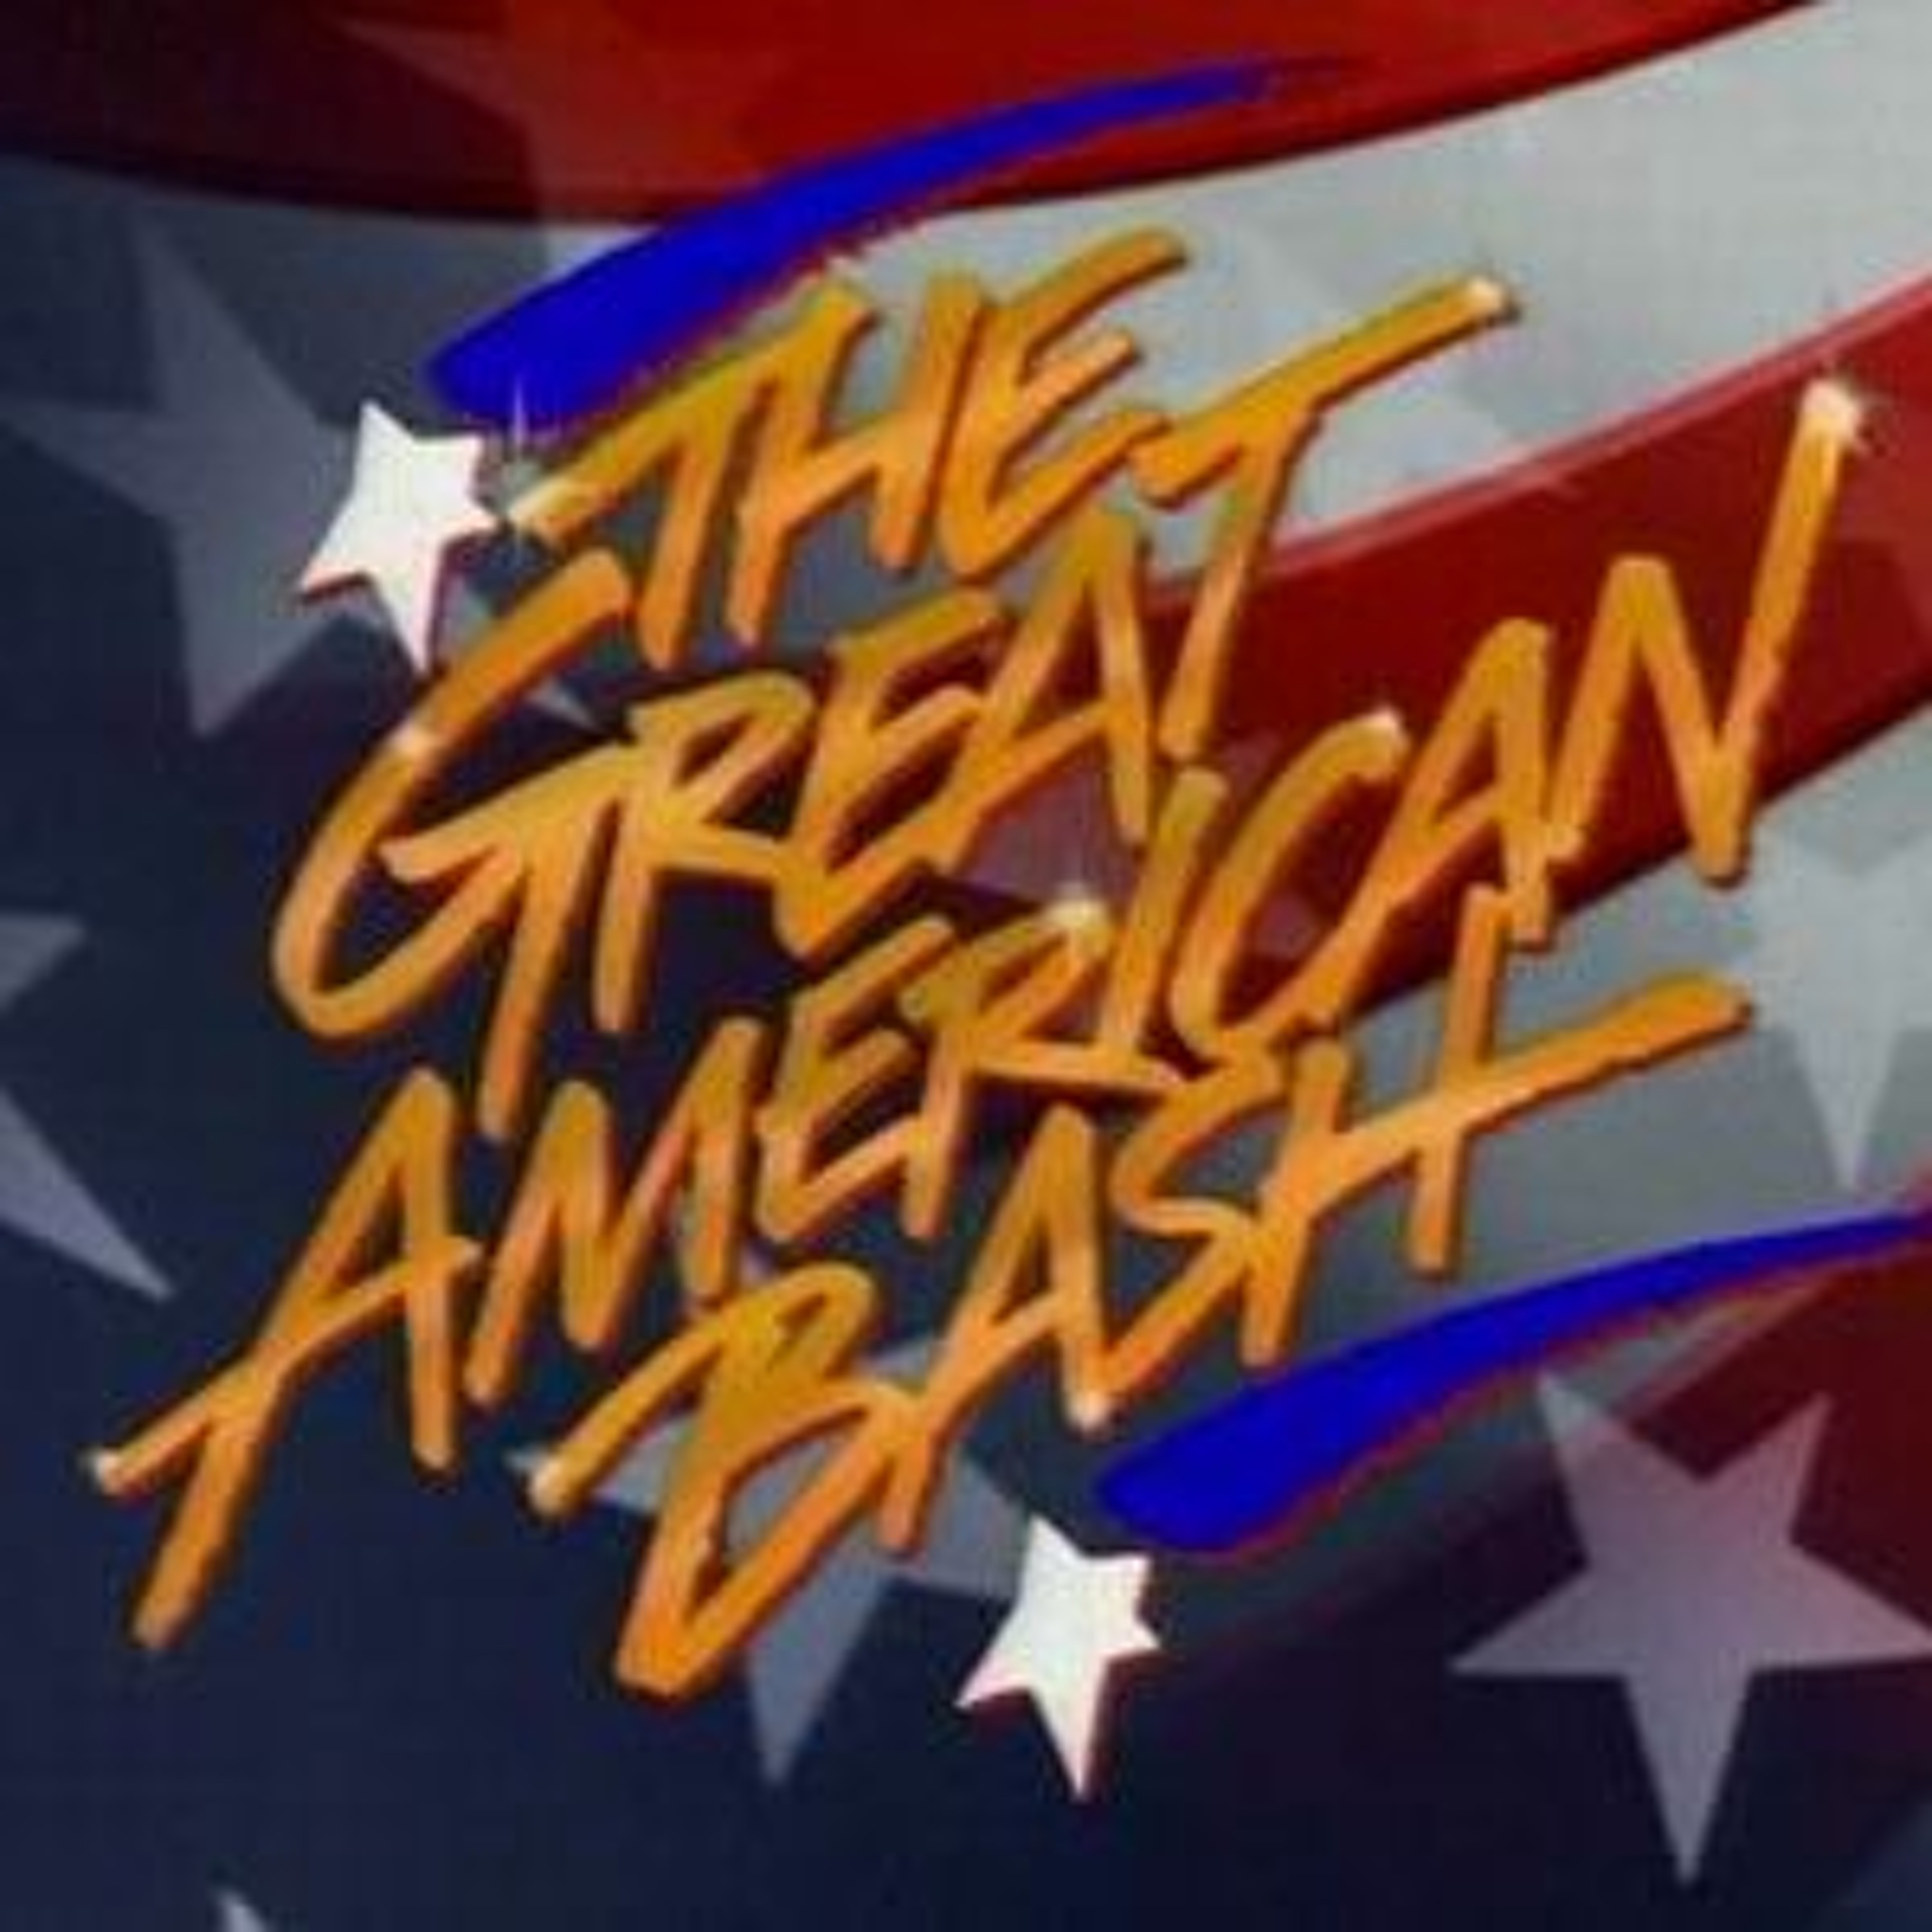 Episode 39.5 - Great American Bash 1996